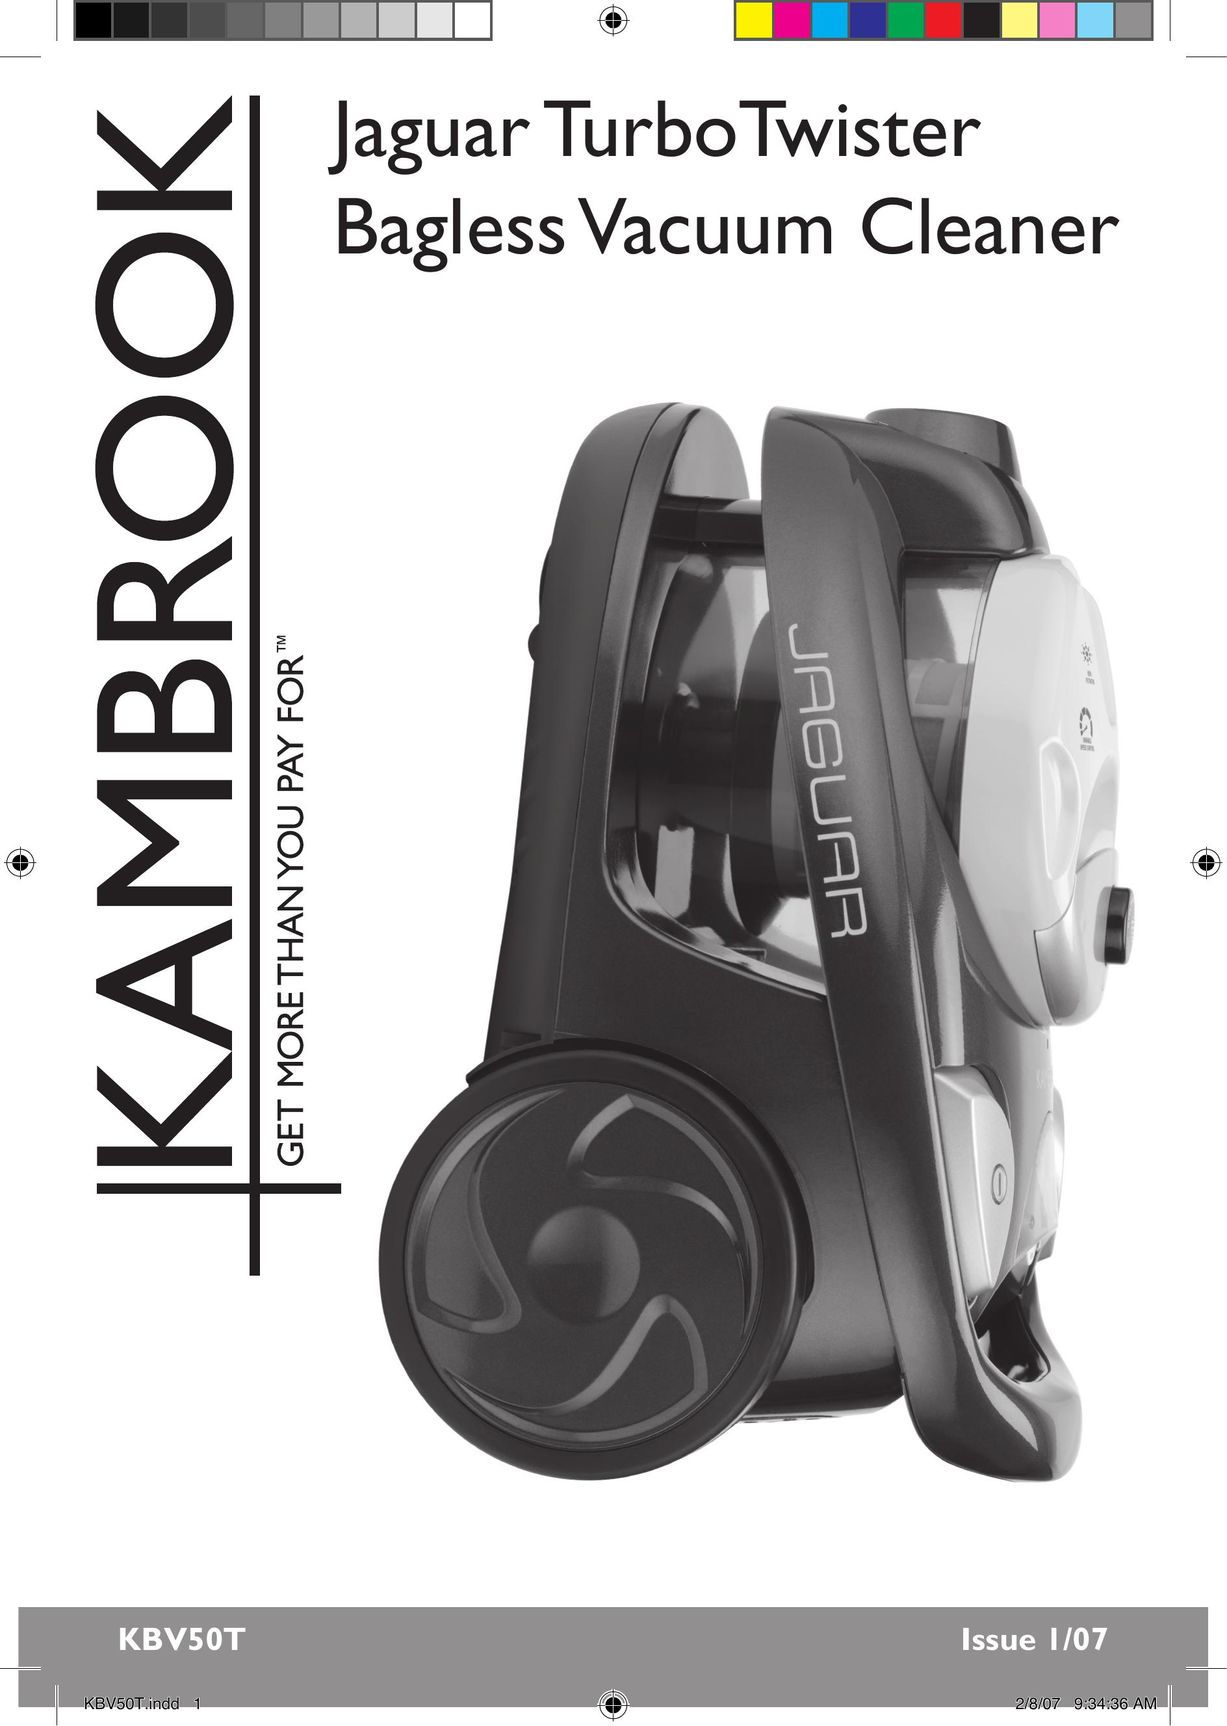 Kambrook KBV50T Vacuum Cleaner User Manual